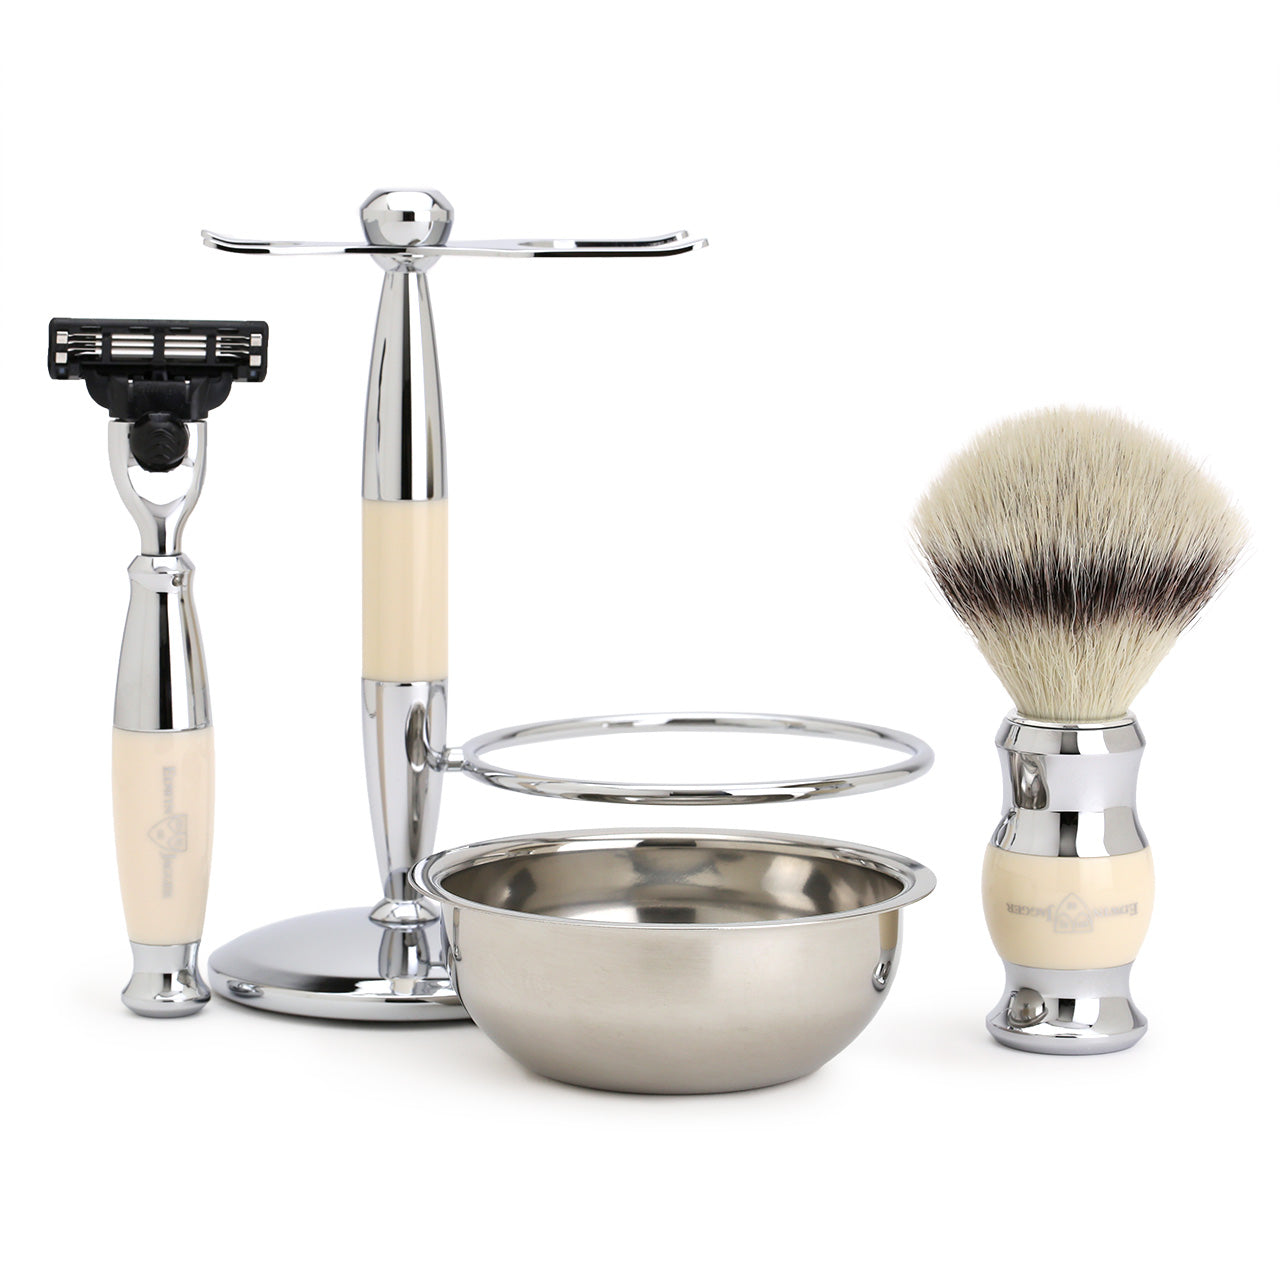 Edwin Jagger Shaving Set with Bowl, Shaving Brush, Mach3 Razor & Stand - Imitation Ivory